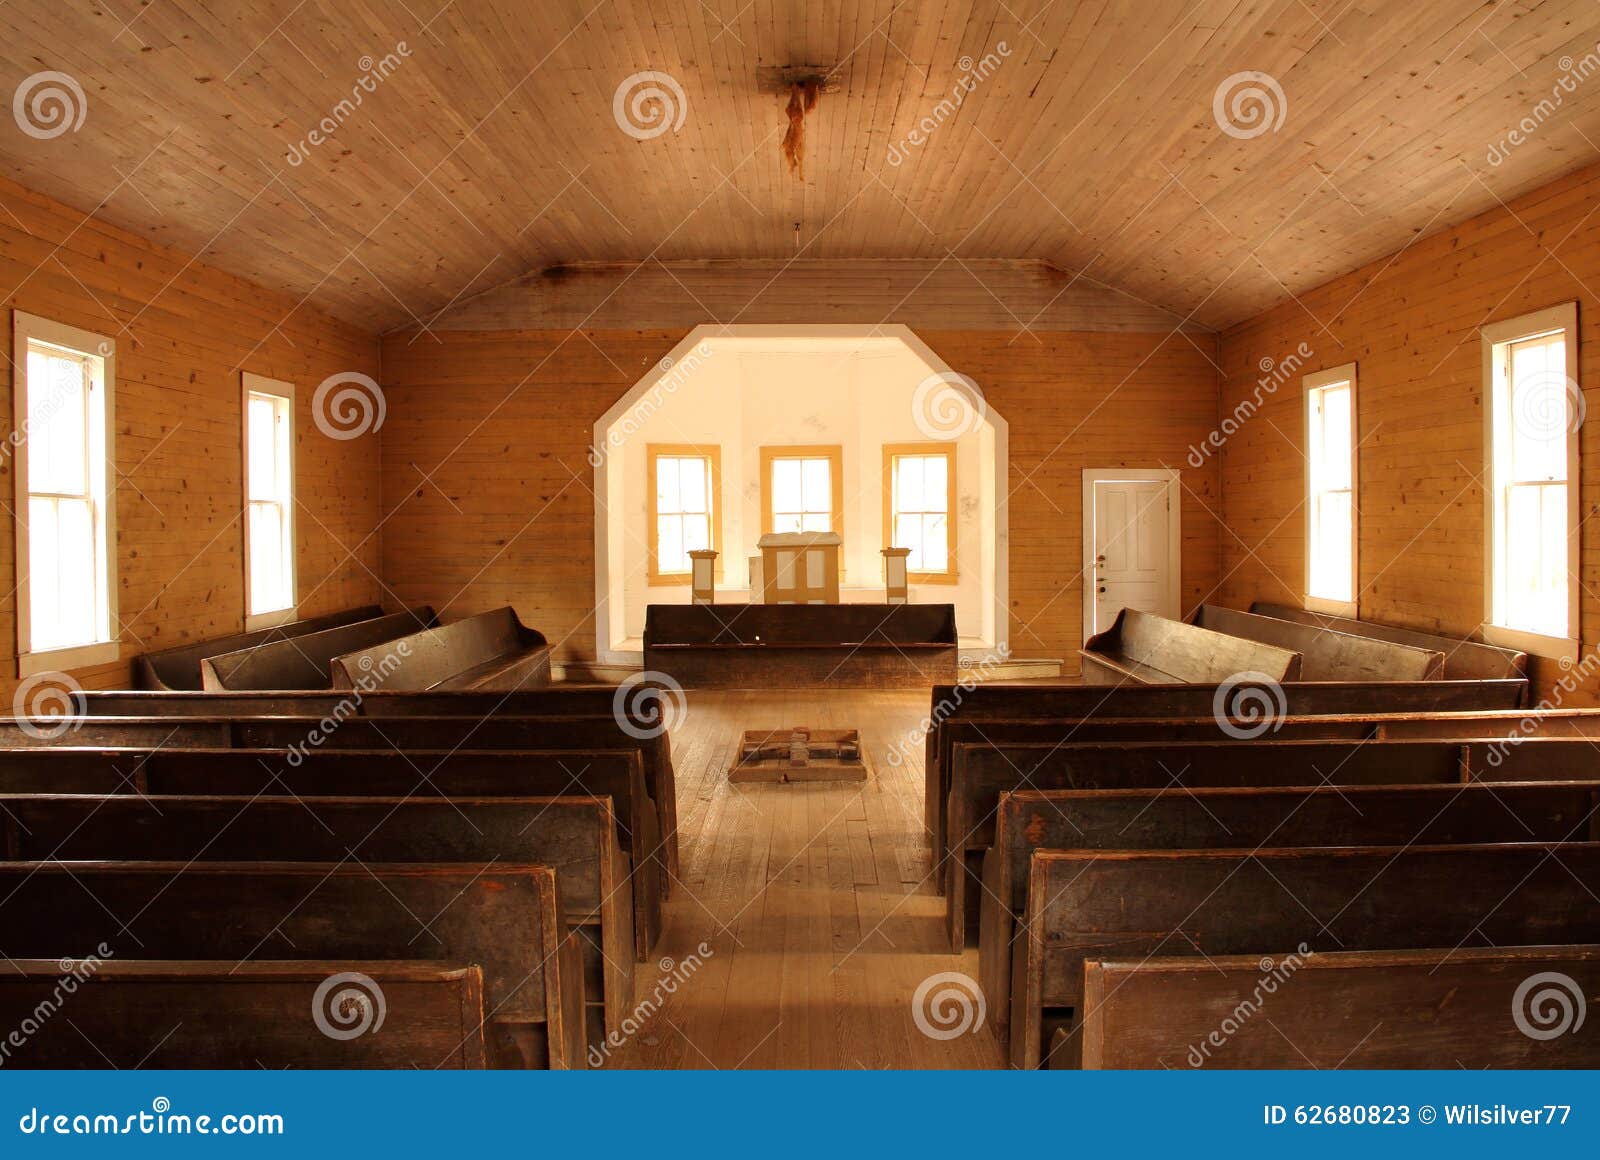 Baptist Church Interior Stock Image Image Of Travel 62680823